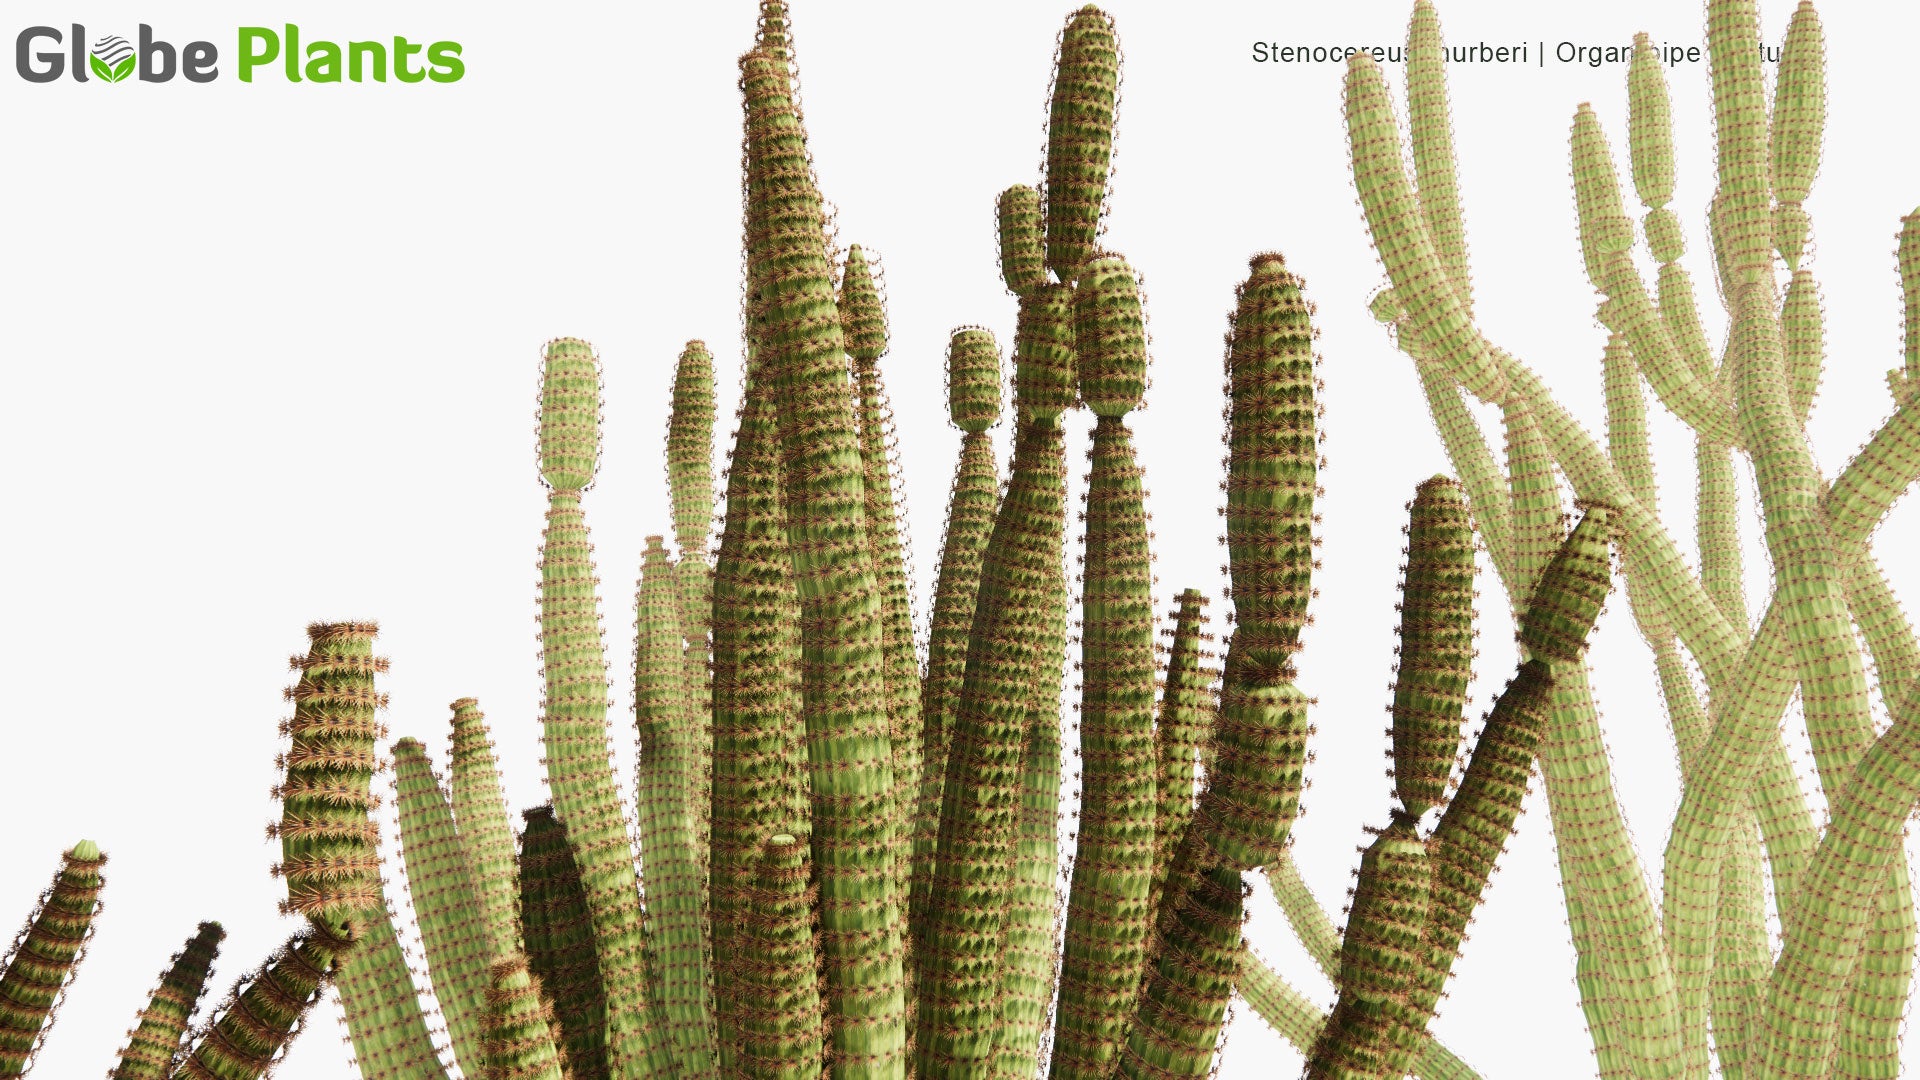 Low Poly Stenocereus Thurberi - Organ Pipe Cactus, Pitaya Dulce (3D Model)